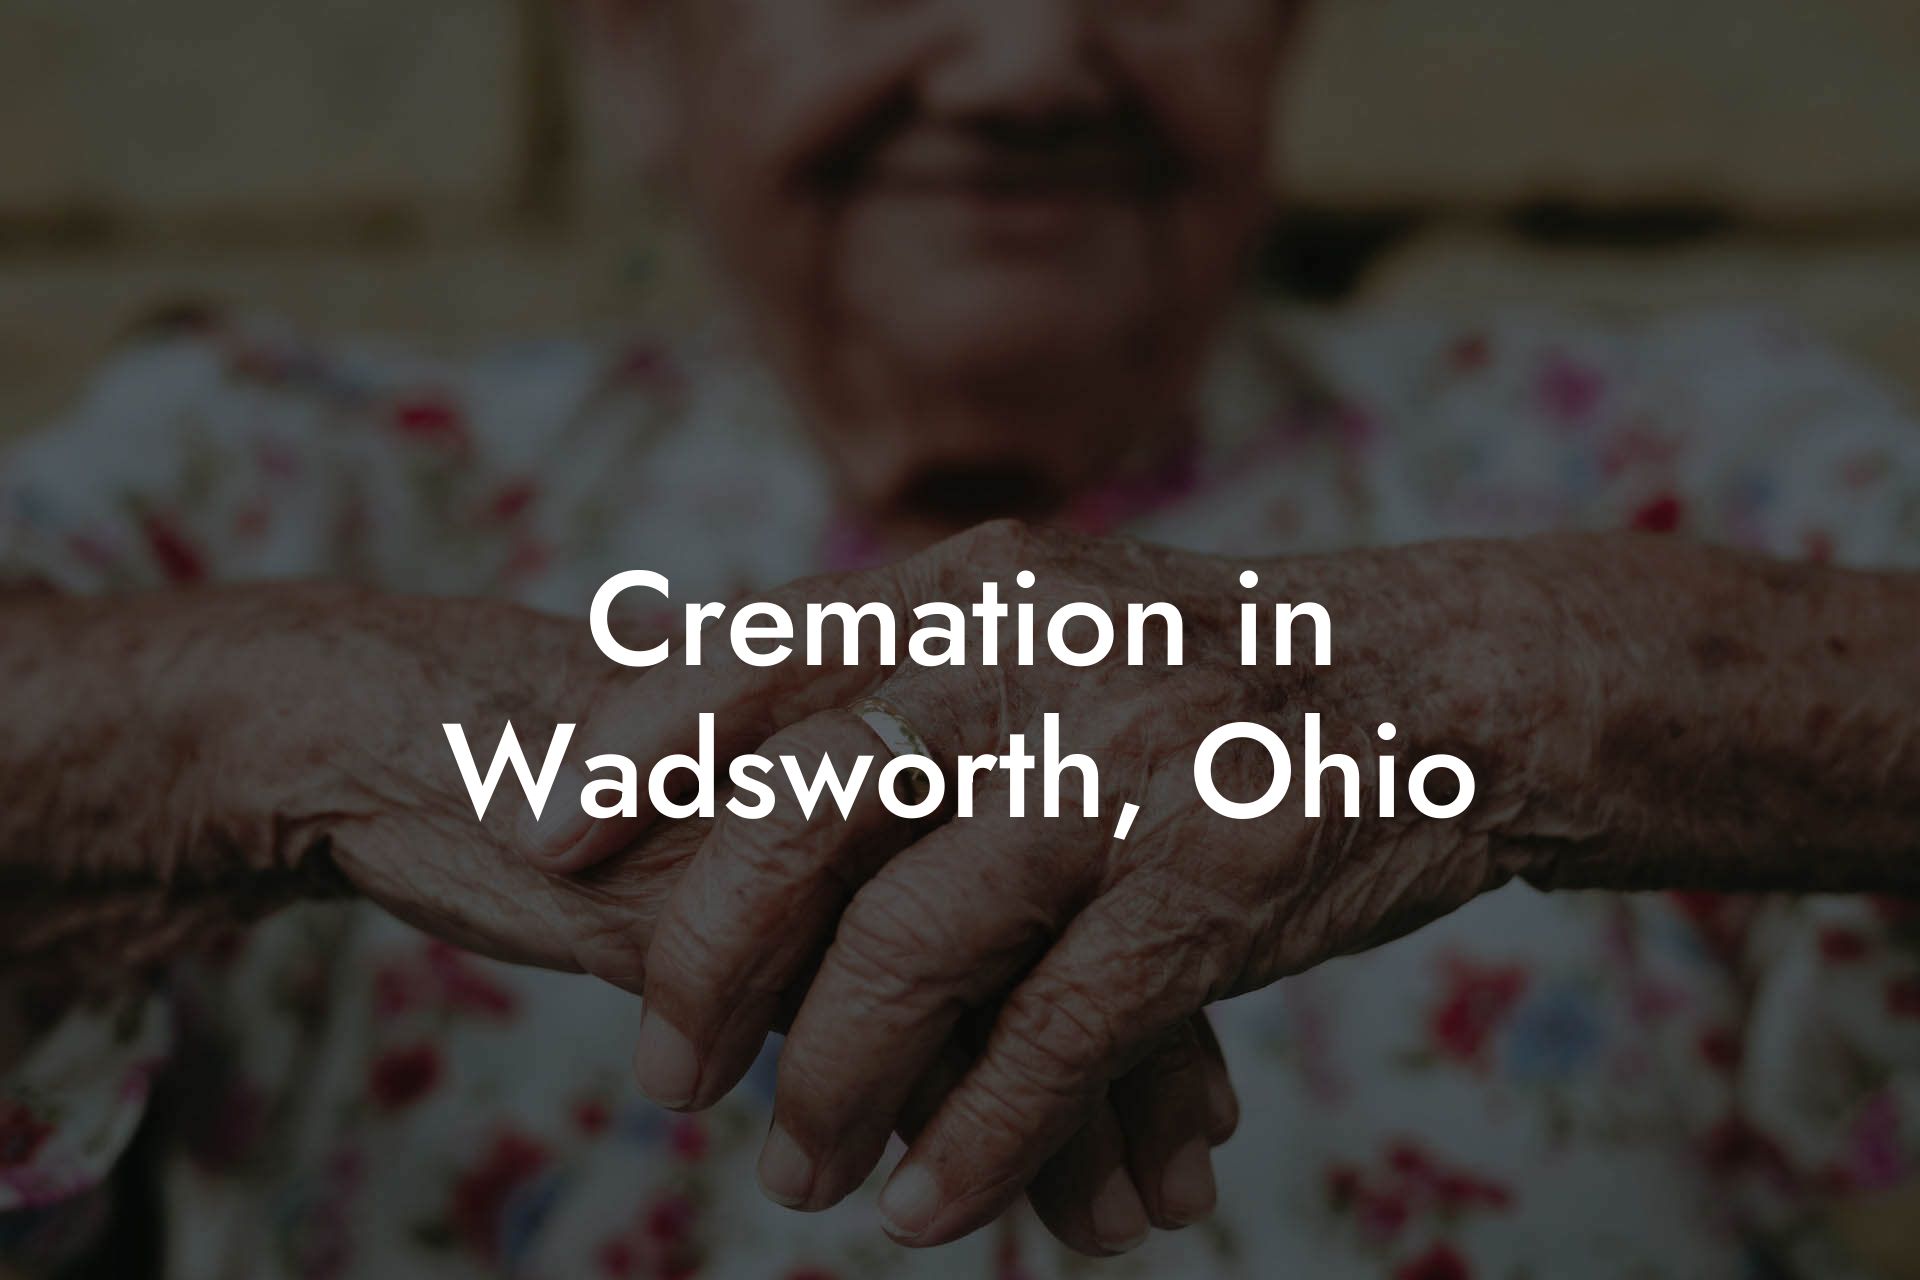 Cremation in Wadsworth, Ohio